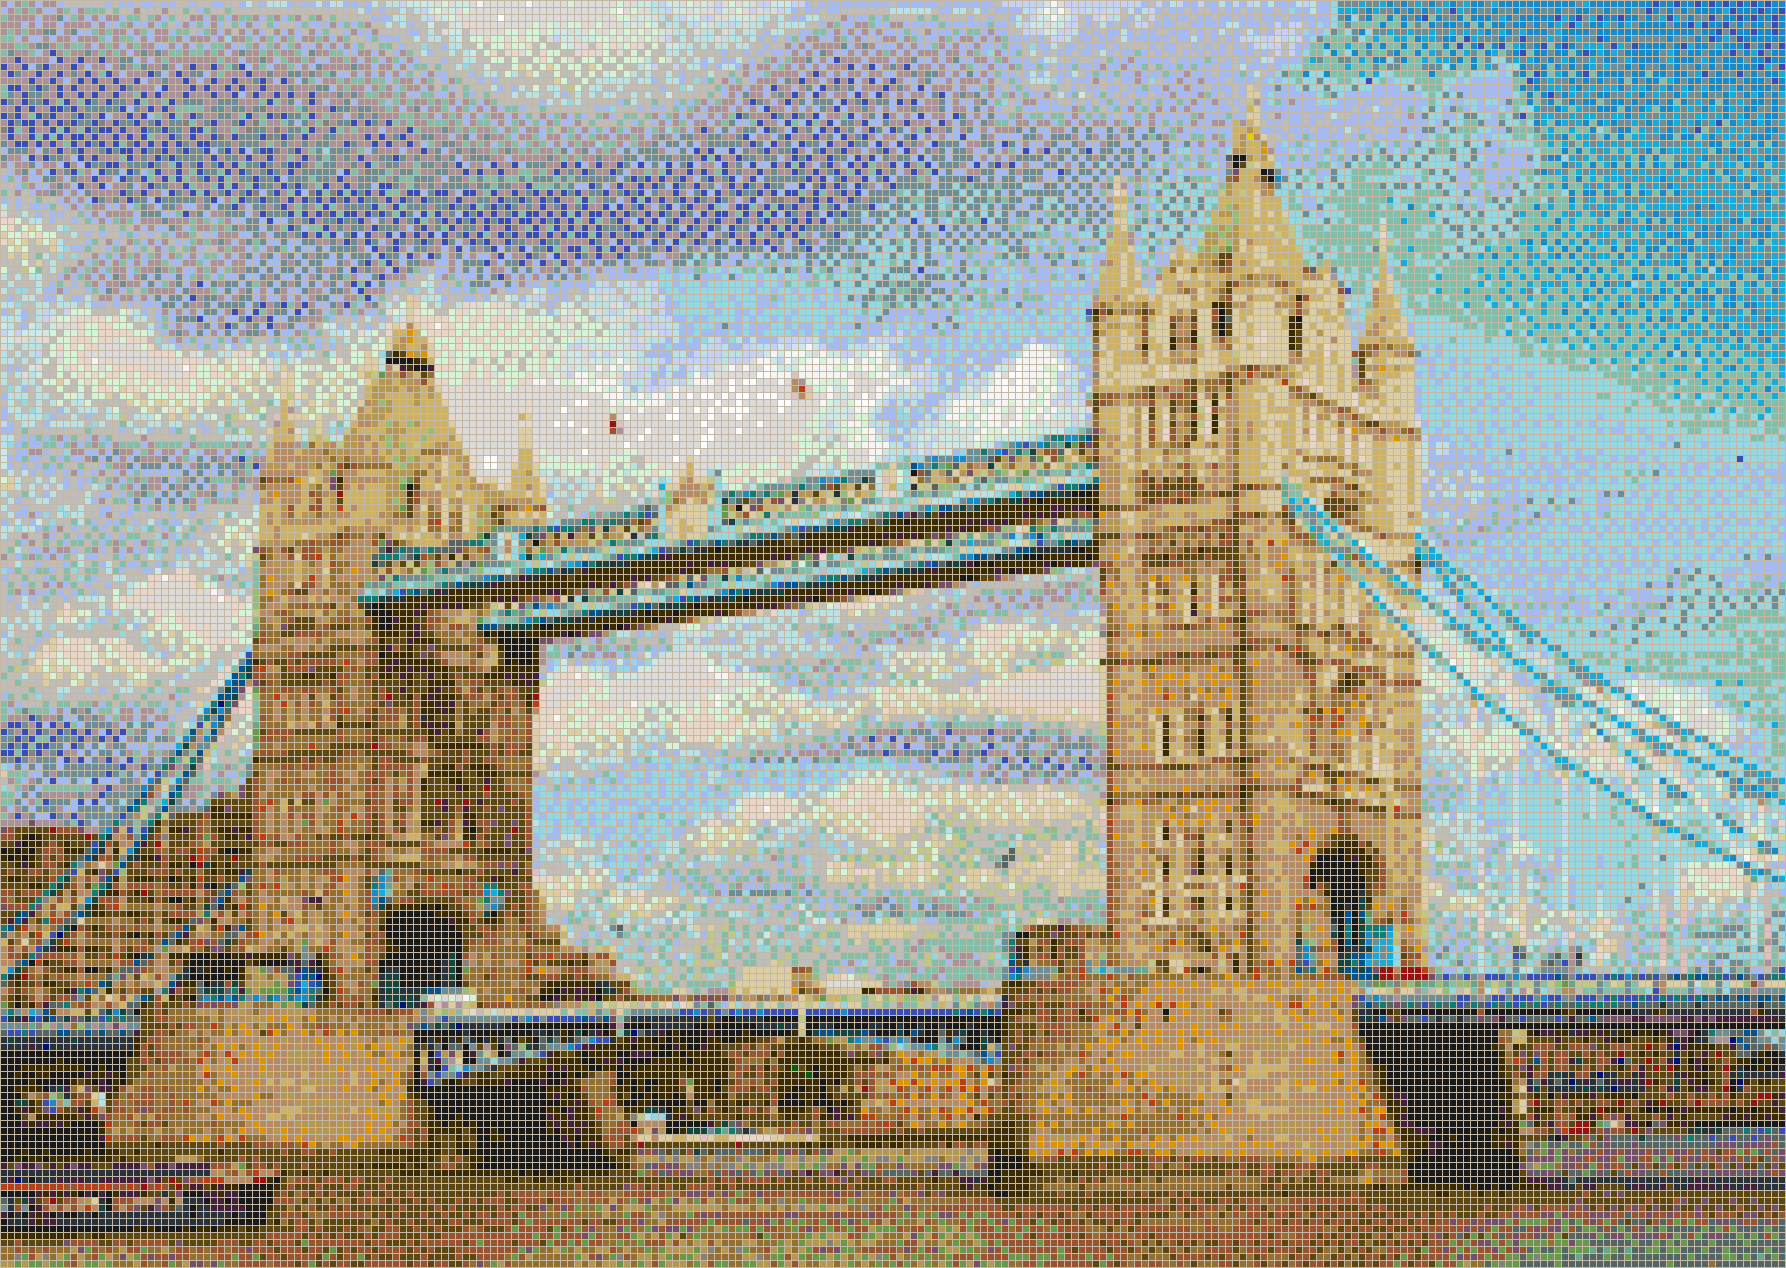 Tower Bridge - Mosaic Tile Art